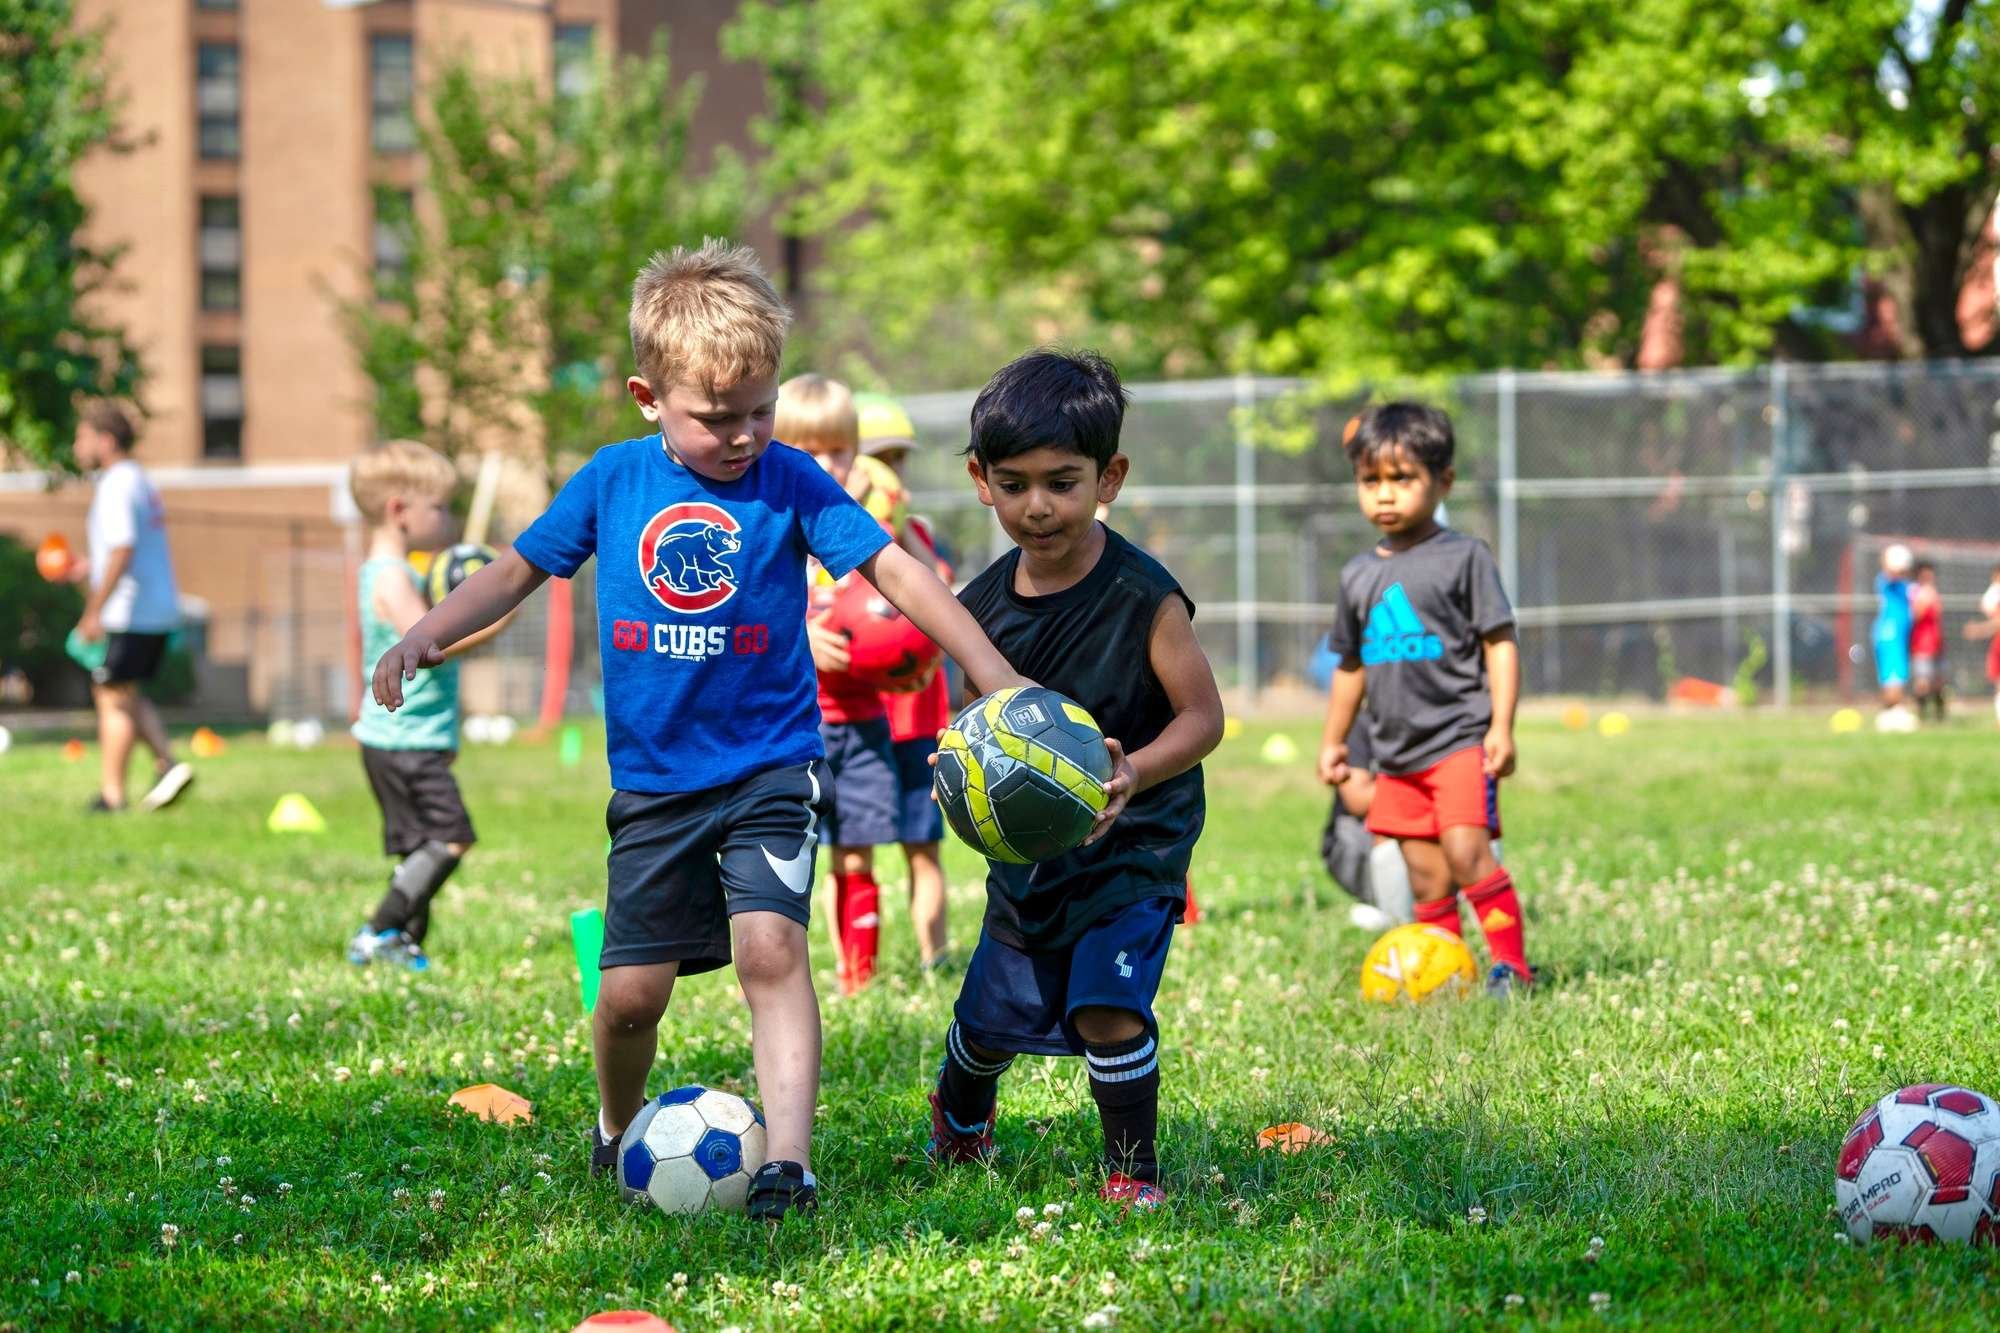 Dc-way-soccer-club-for-kids-in-washington-dc-summer-camp-at-tyler-elementary-school- 0280.jpg